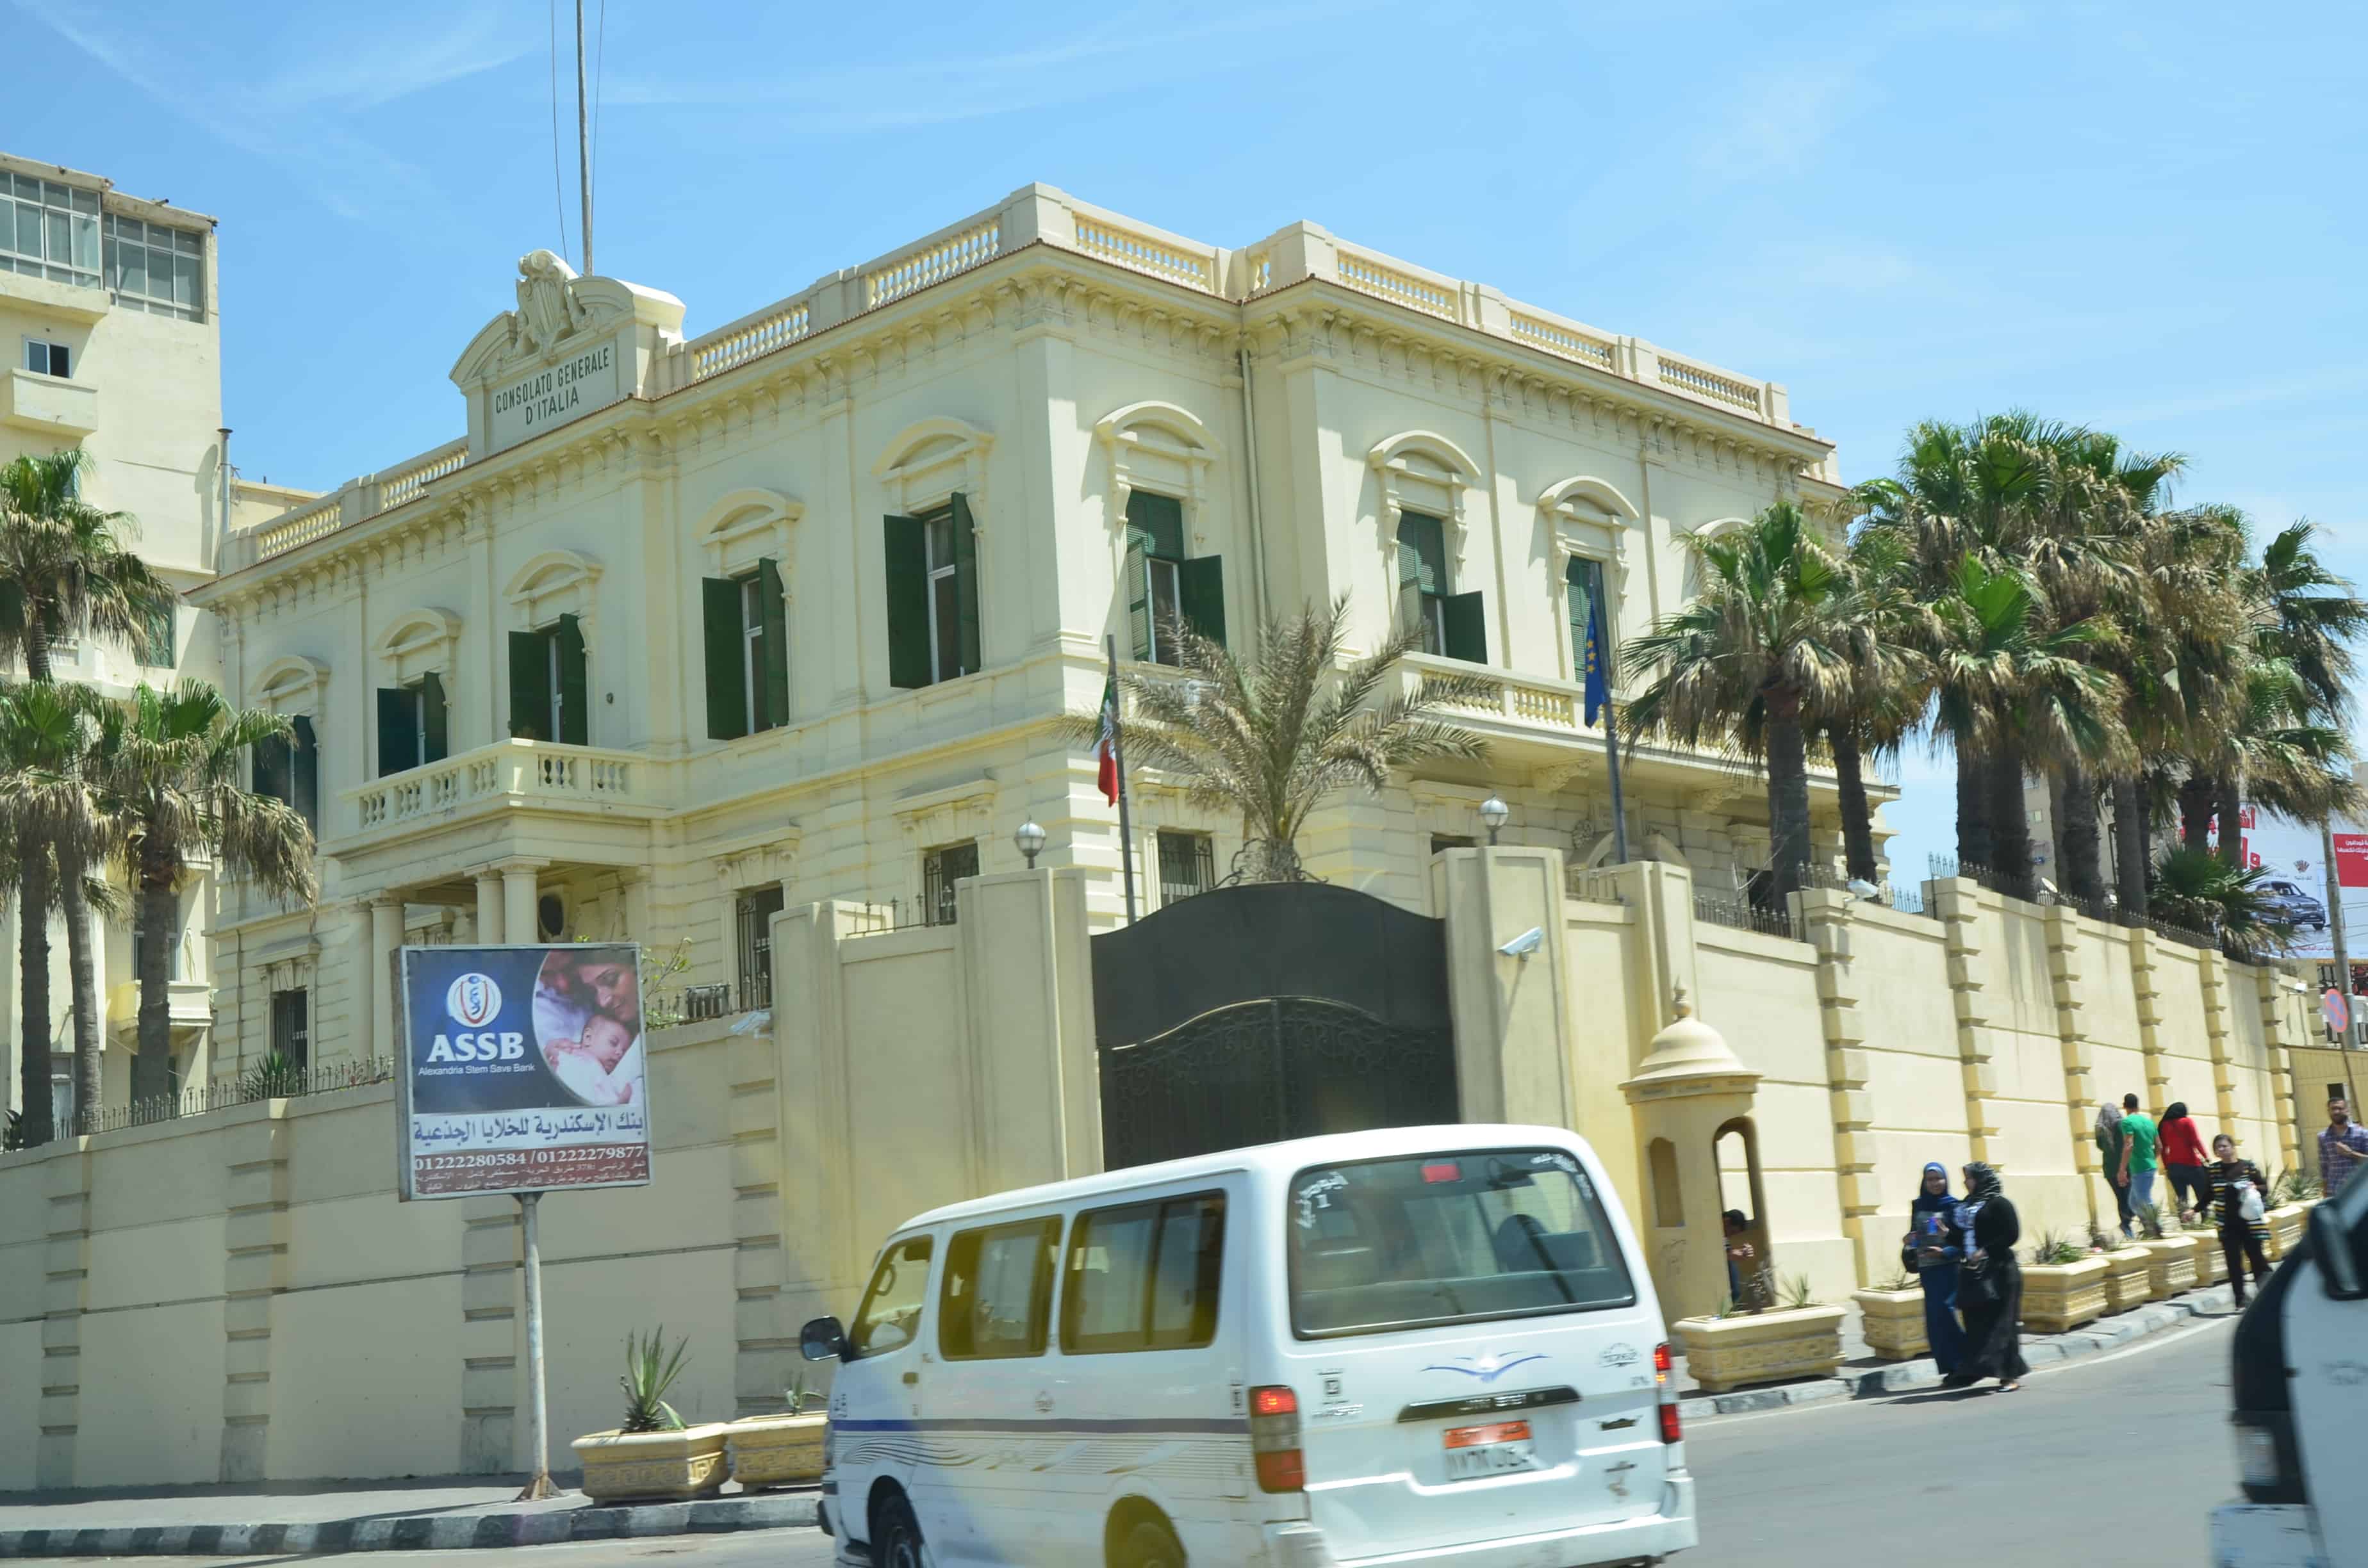 Italian Consulate in Alexandria, Egypt